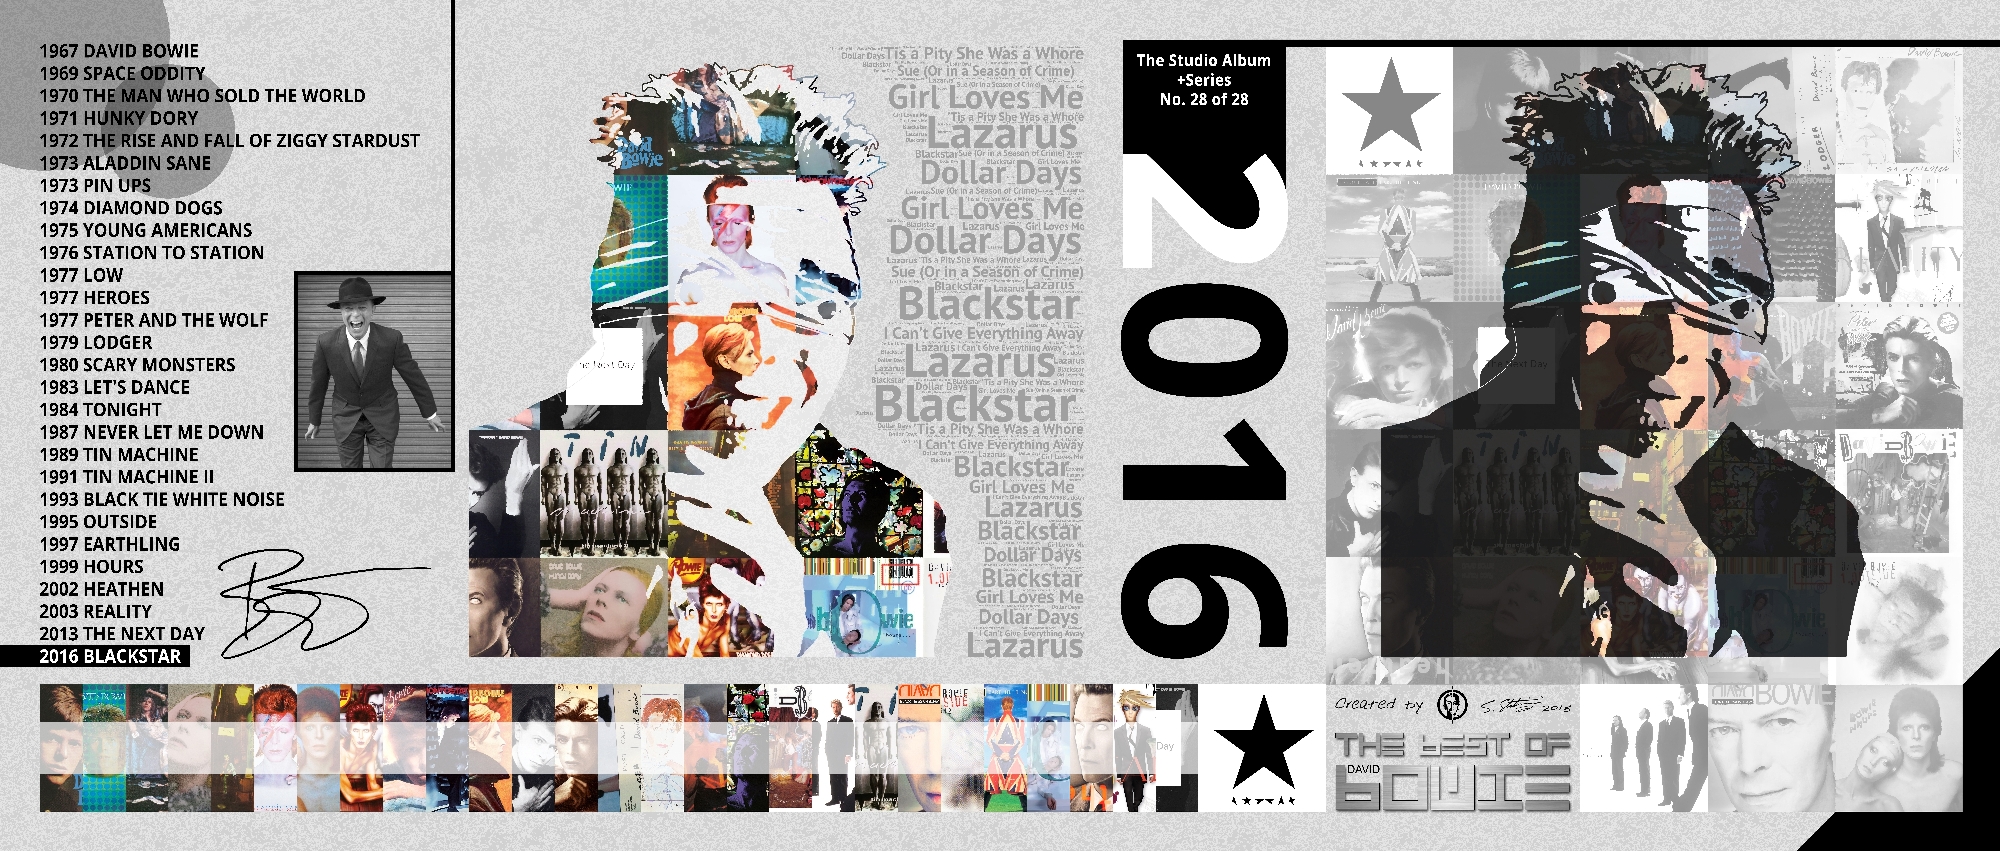 David Bowie Art Creation by Steve Stachini - 2016 Blackstar 162cm x 69cm